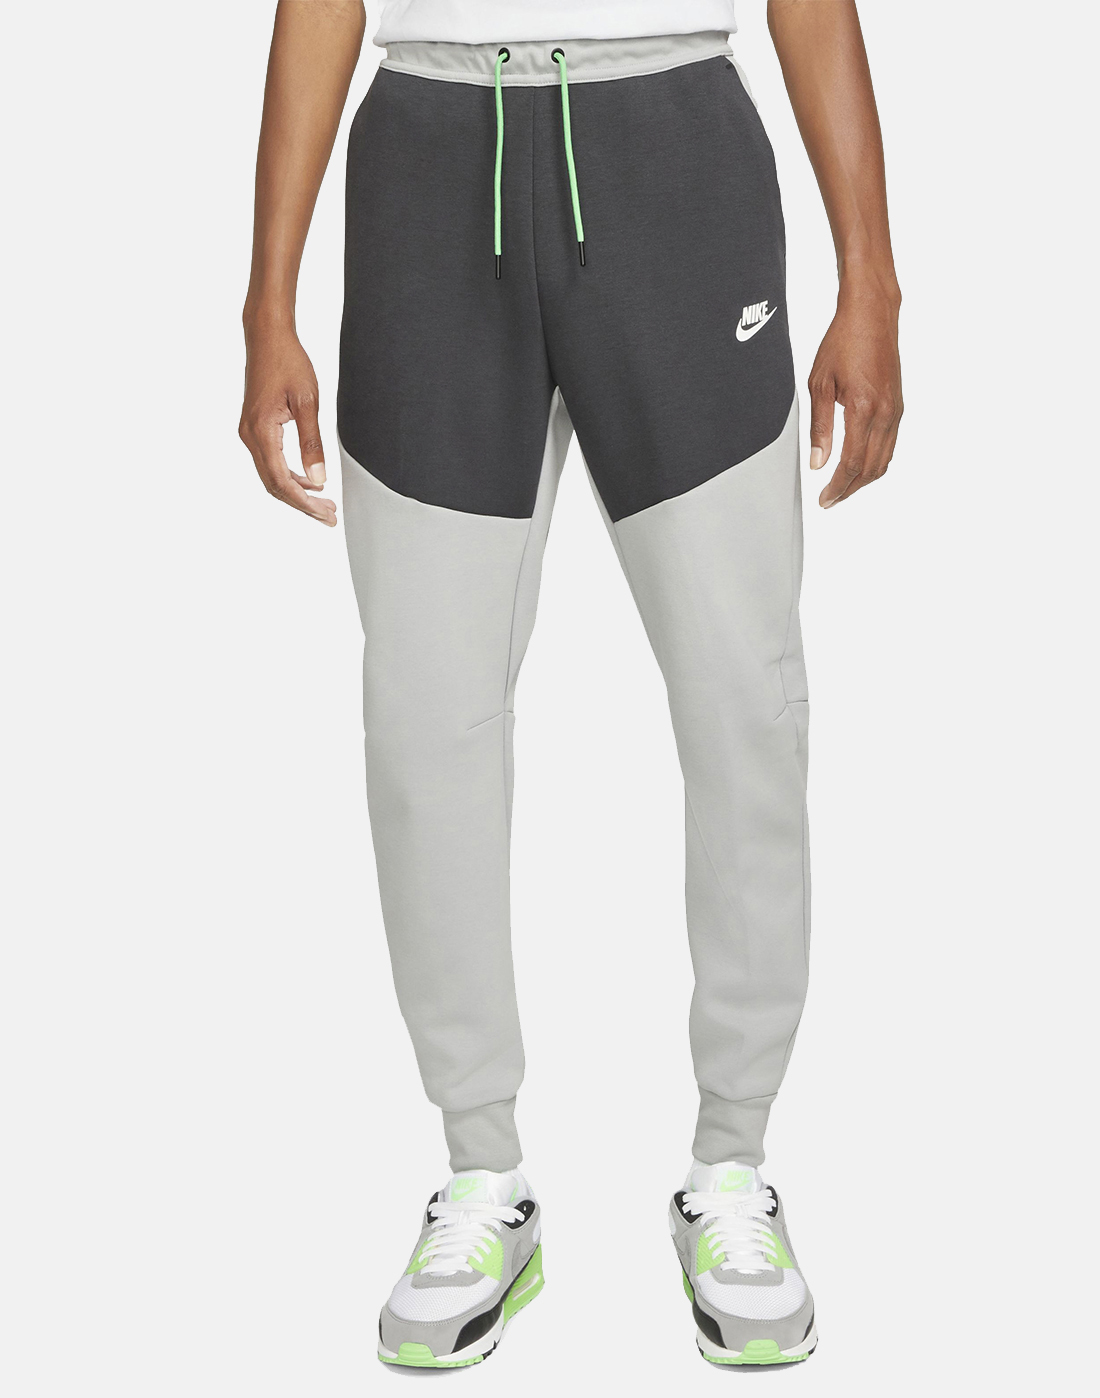 Nike Mens Tech Fleece Joggers - Grey | Life Style Sports UK